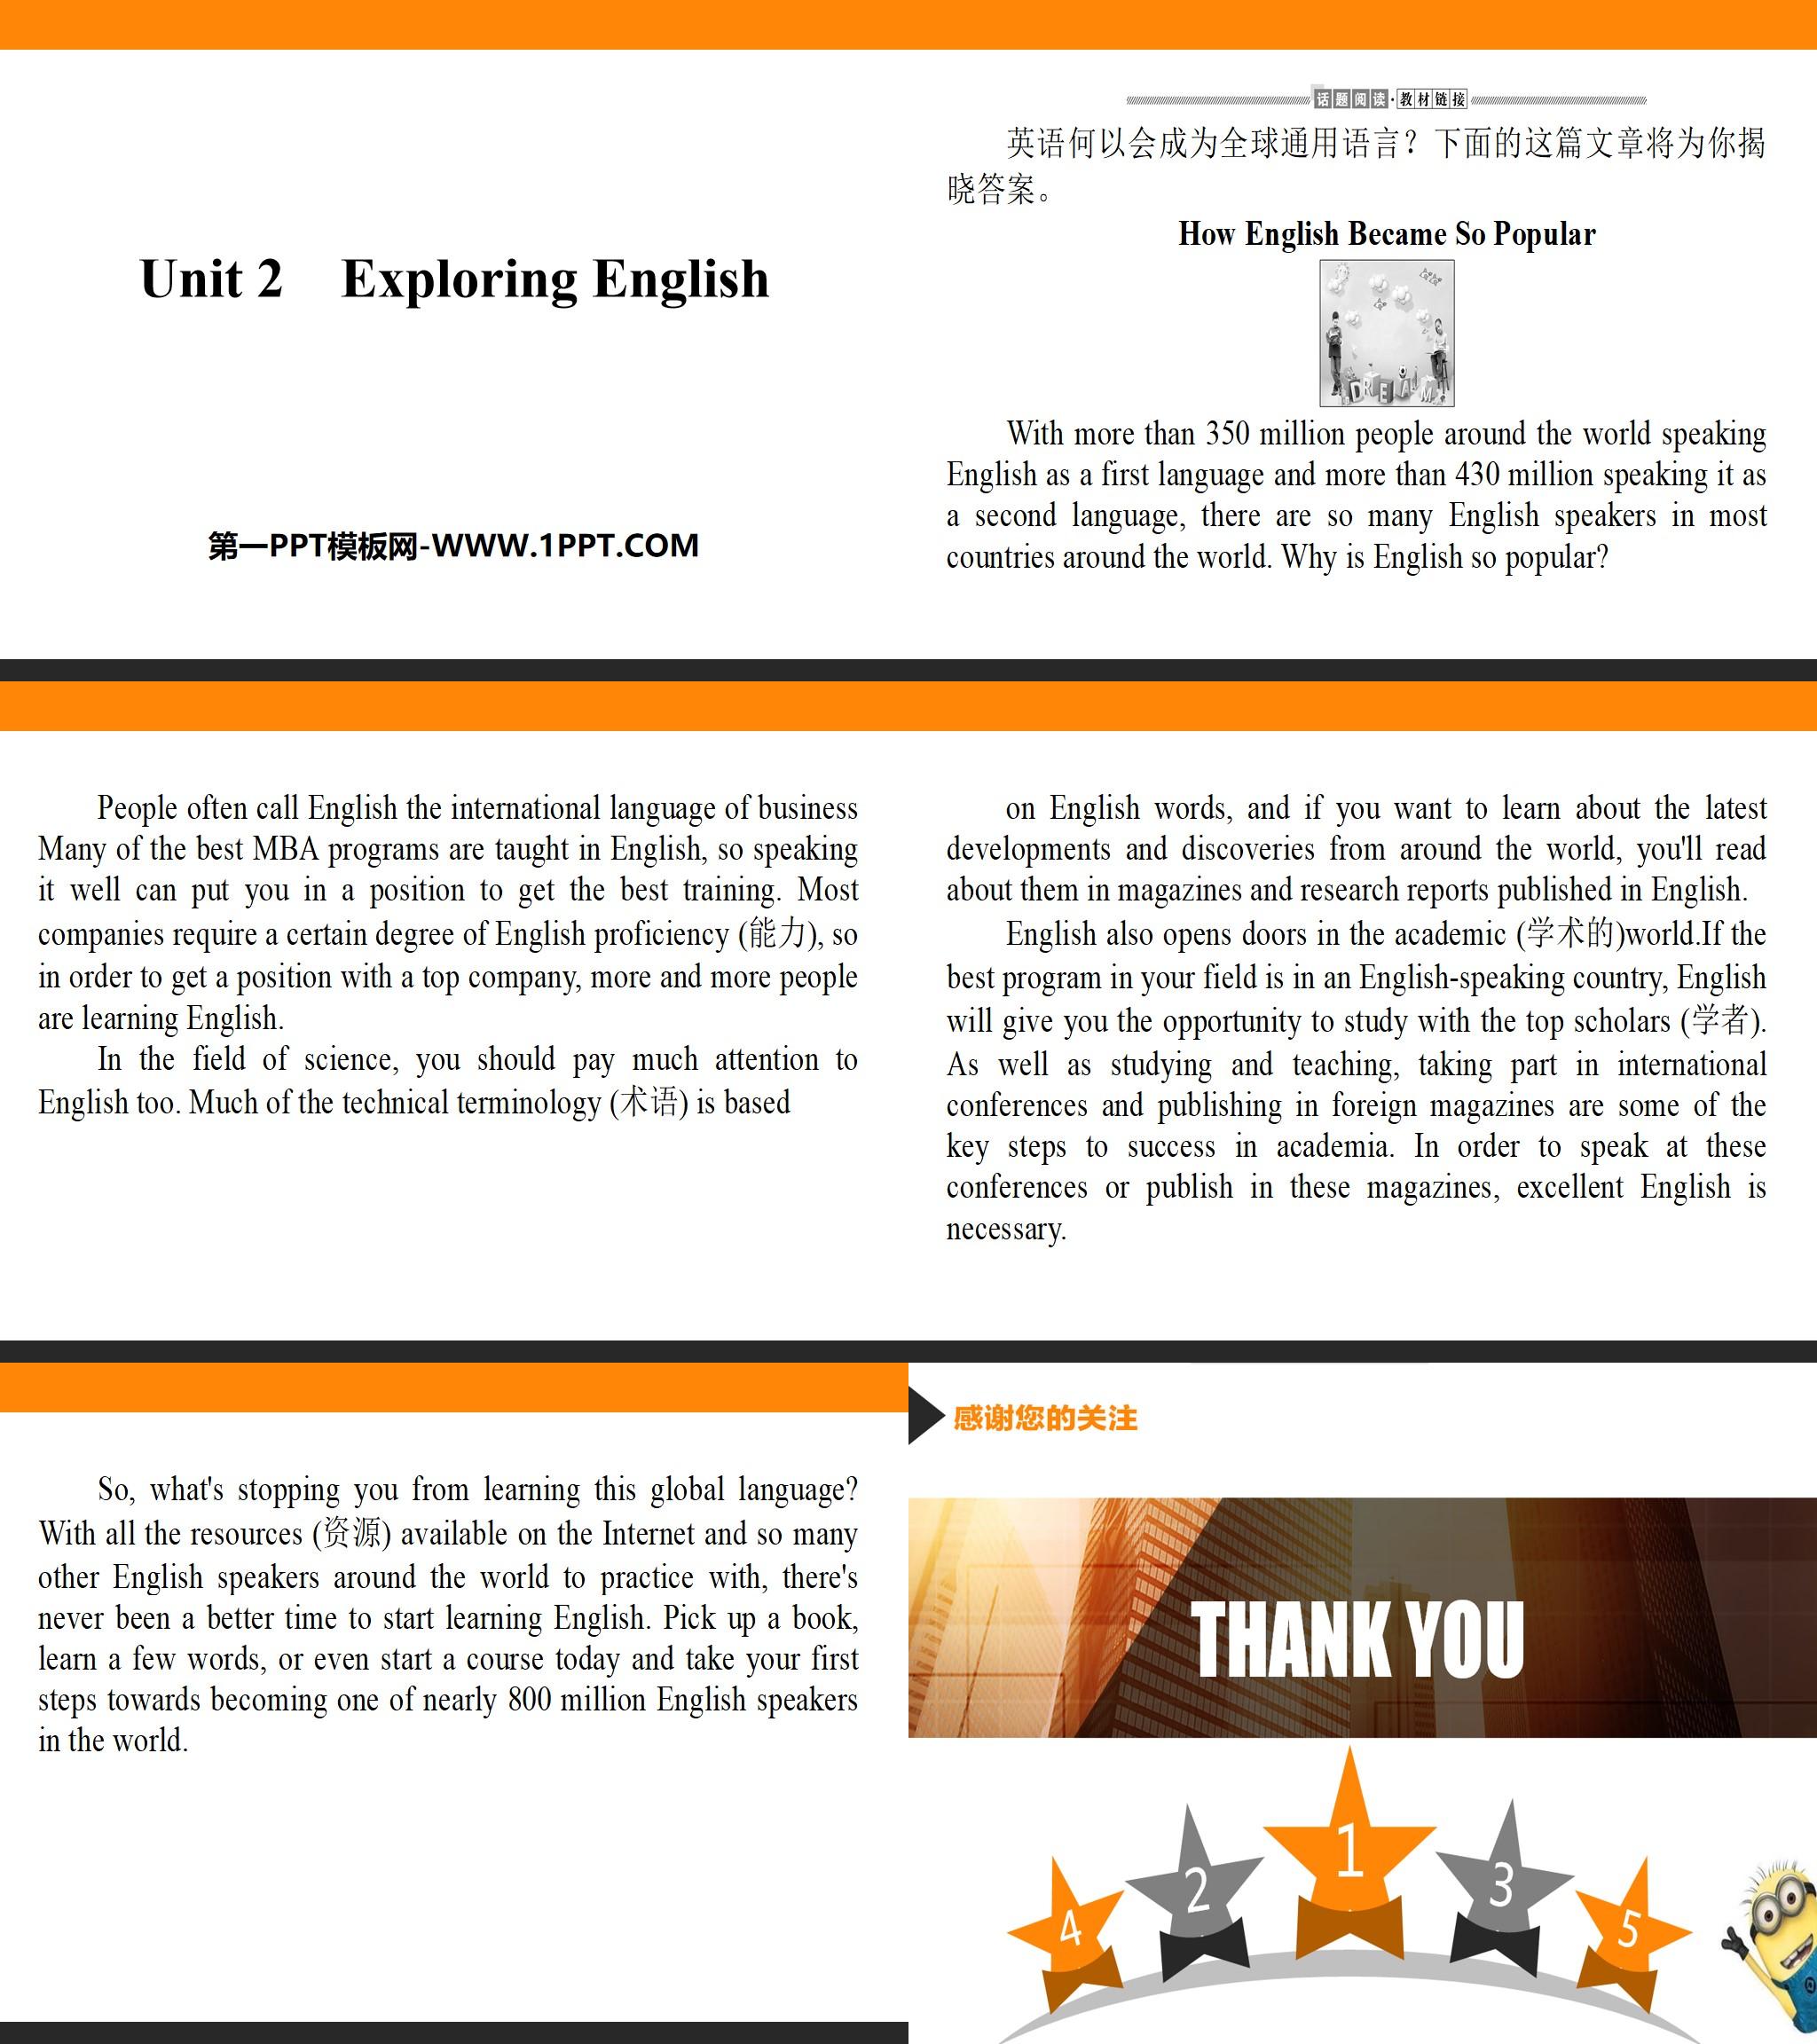 《Exploring English》PPT
（2）